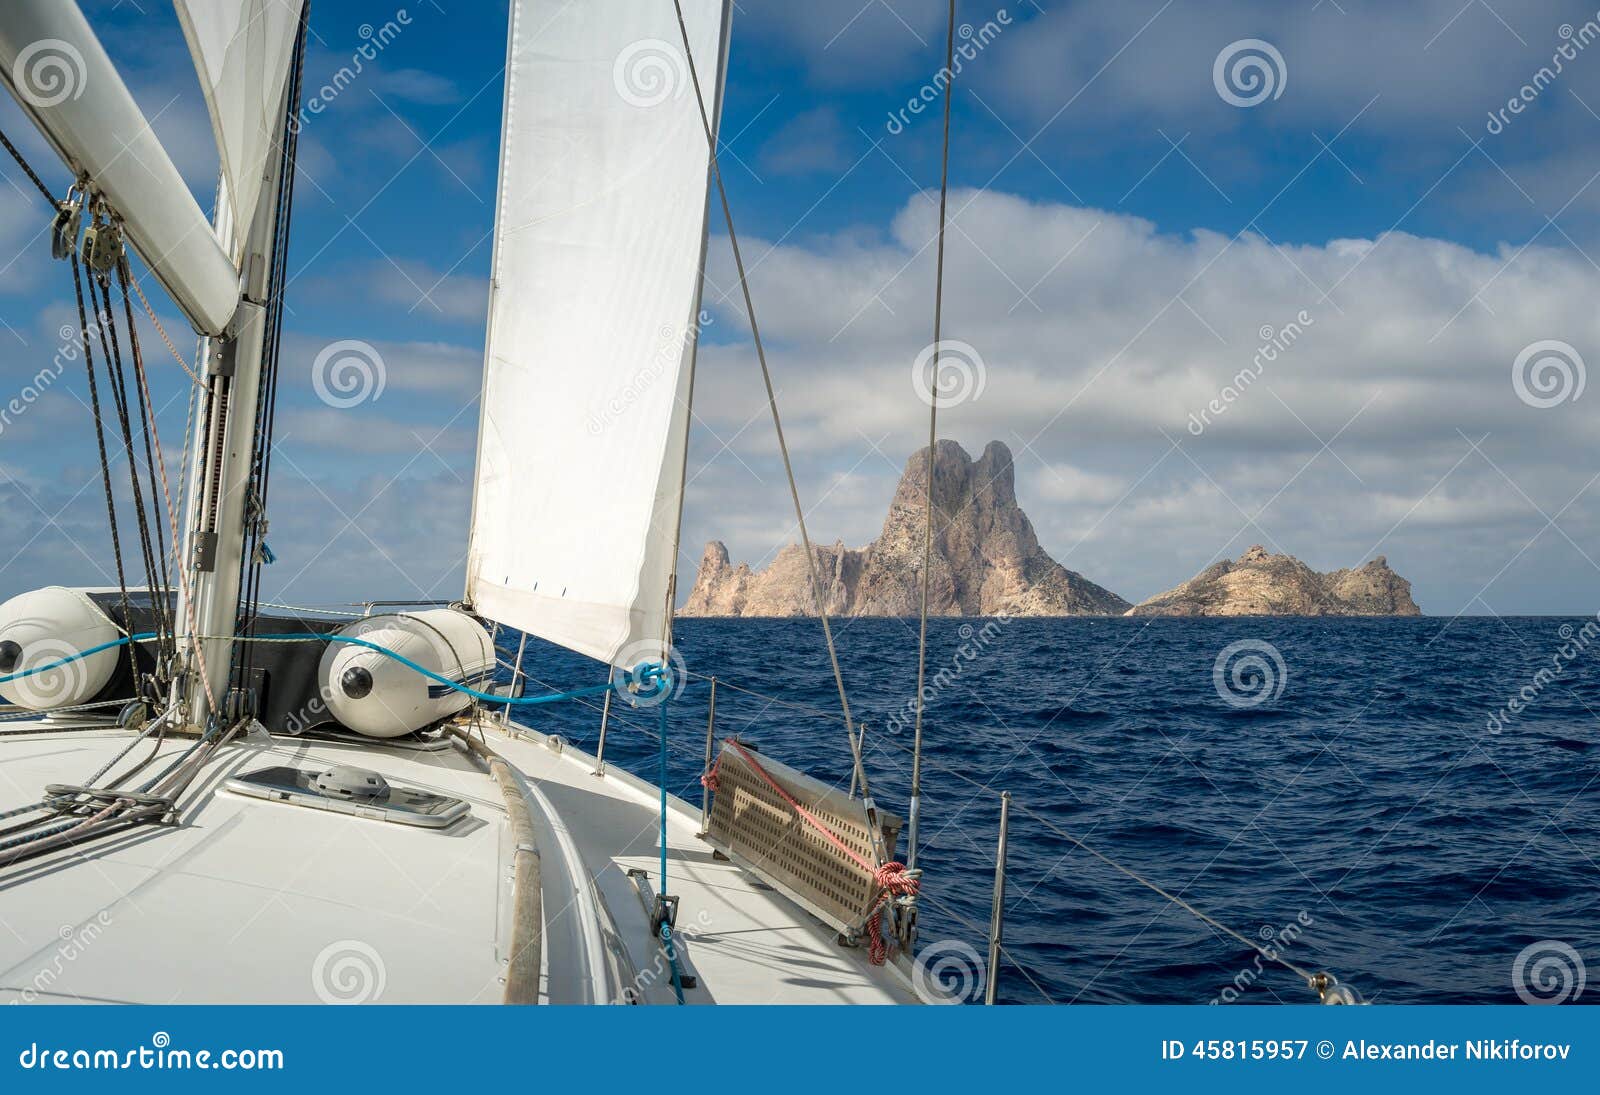 sailing to rock island